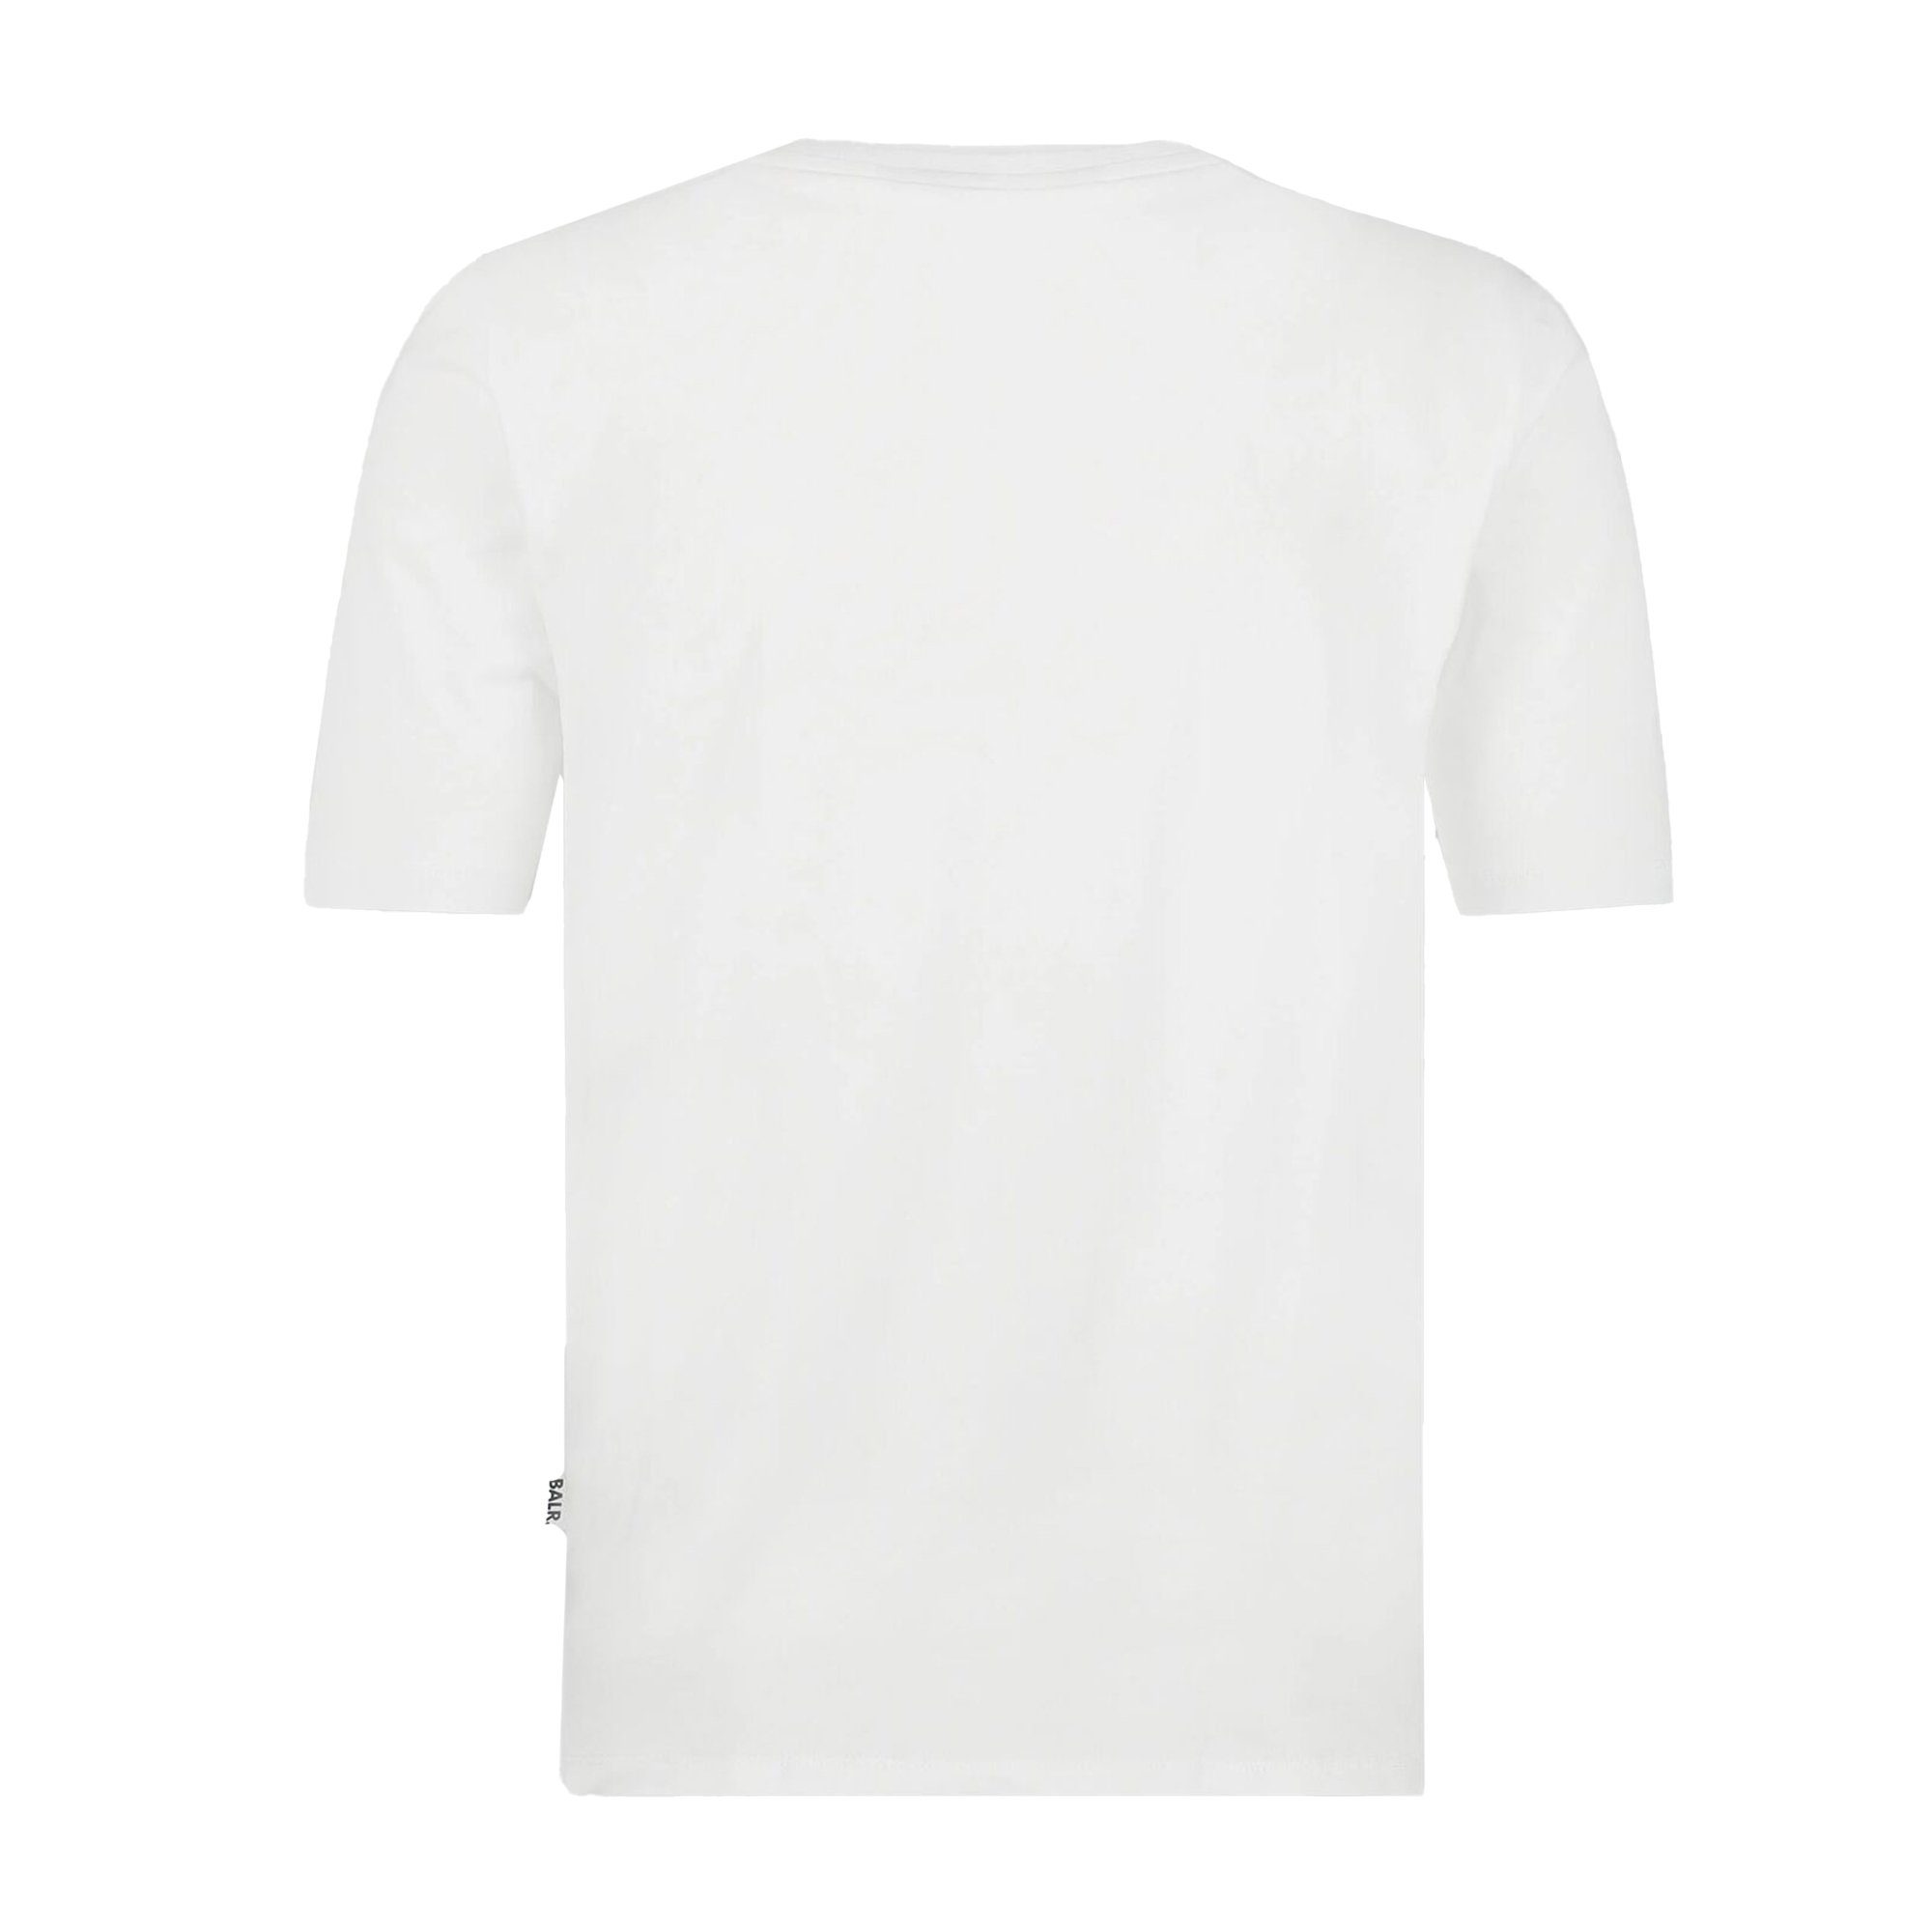 Small - Athletic BALR. Branded Chest T-Shirt T-Shirt Weiß Herren